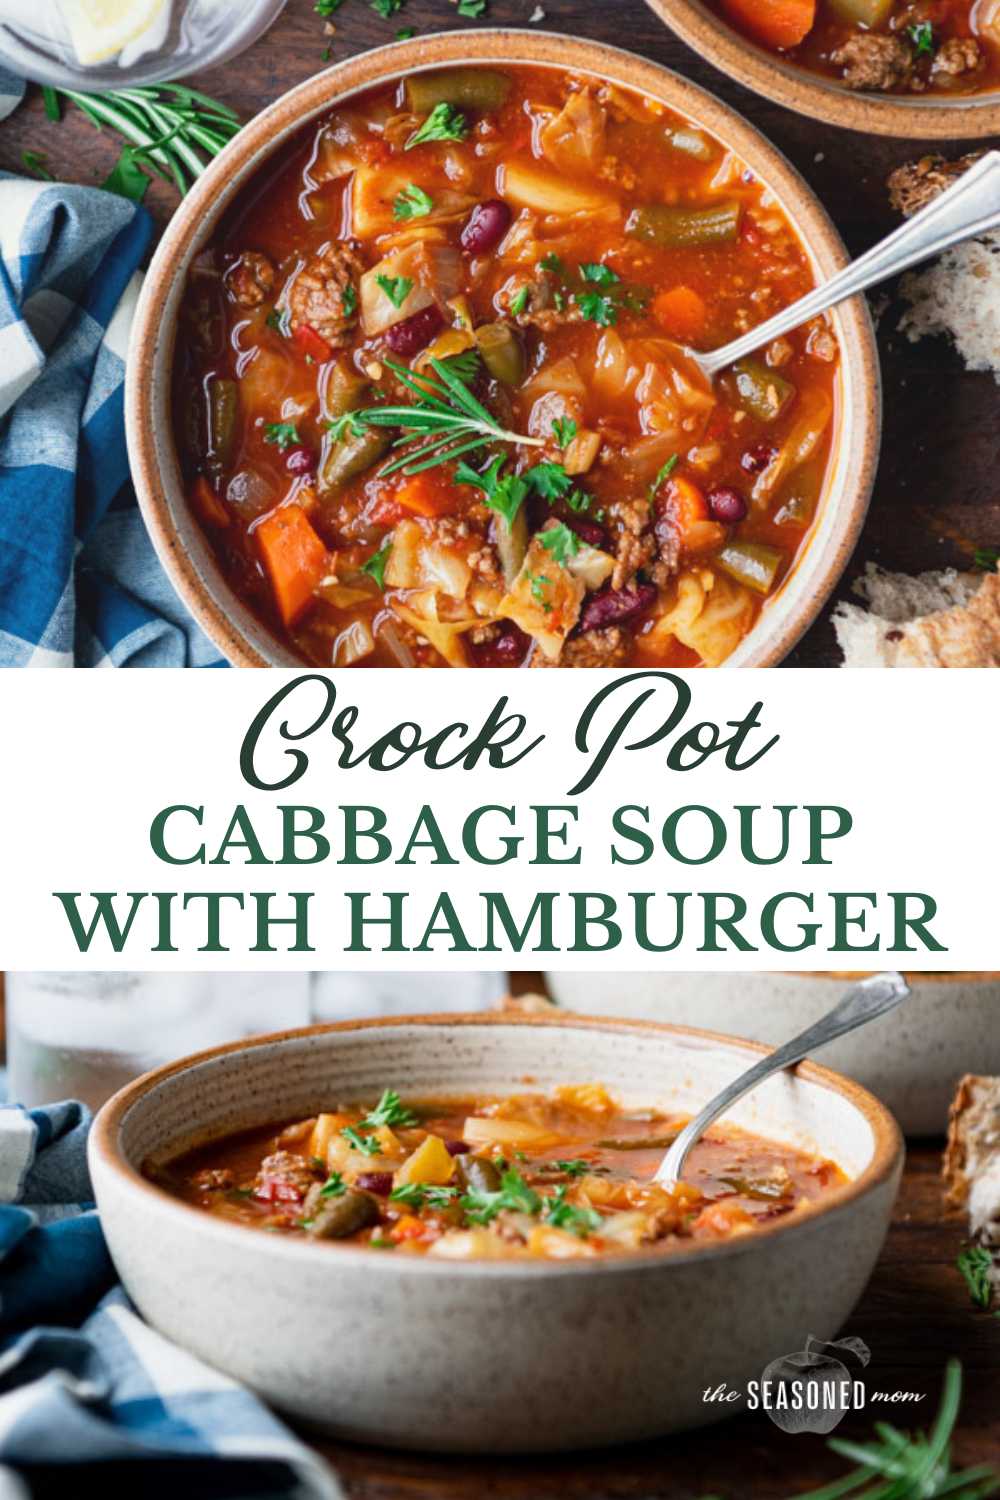 Crockpot Cabbage Soup with Hamburger - The Seasoned Mom